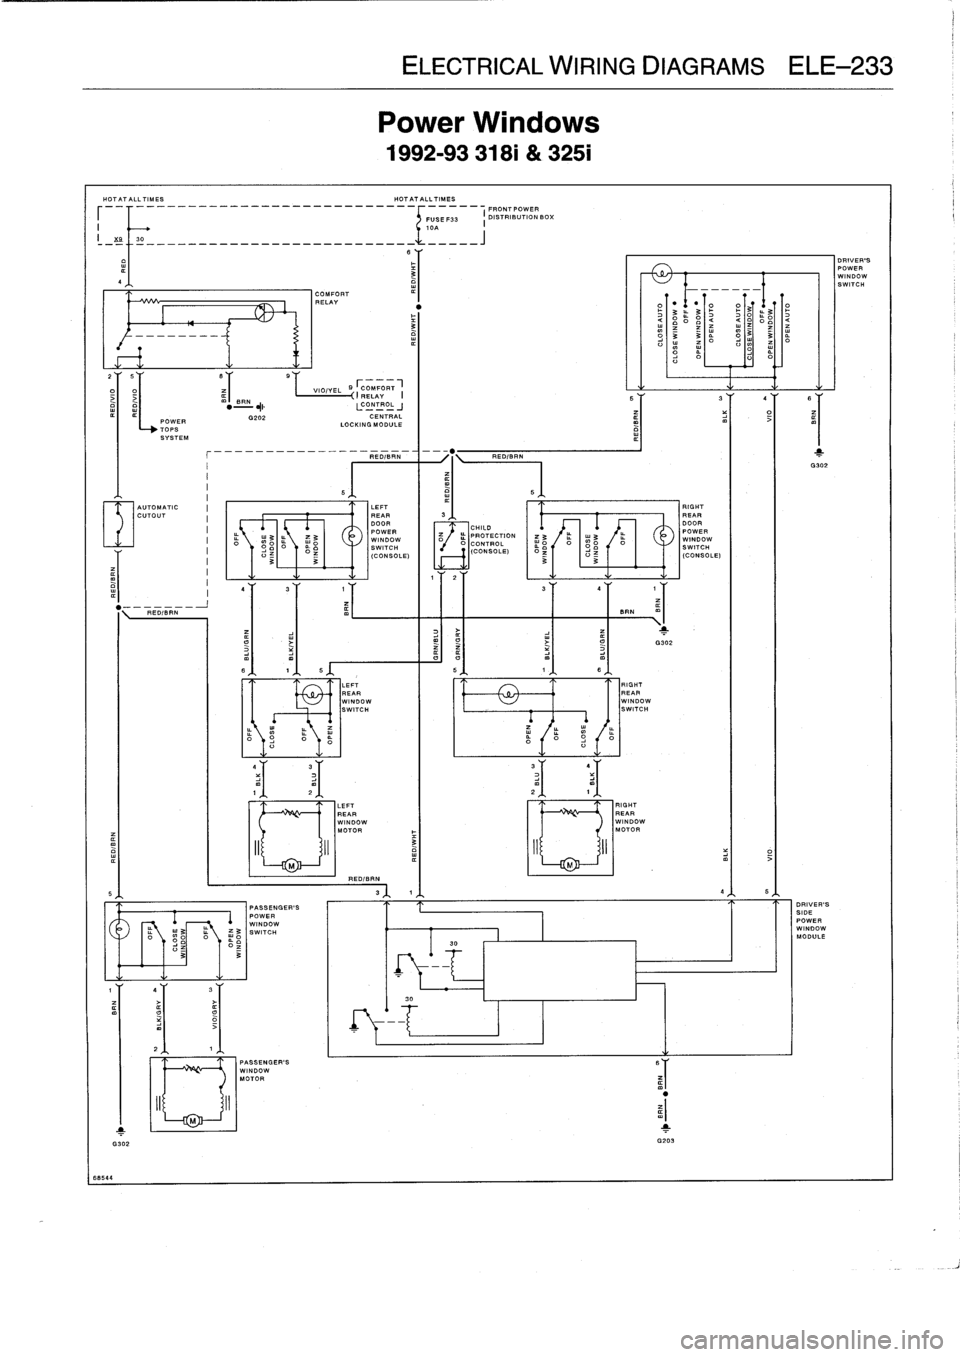 BMW M3 1993 E36 Repair Manual 
HO7A7AlL71ME5

	

HOTATALLTIMES

r
--

68544

i

*---AAA
POWER

AUTOMATIC
CUTOUT

O

PASSENGERS
WINDOWMOTOR

V
1
G3D2

B
r
COMFDRT~
VIOIYEL
(IRELAY
I

ELECTRICAL
WIRING
DIAGRAMS
ELE-233

Power
Windo